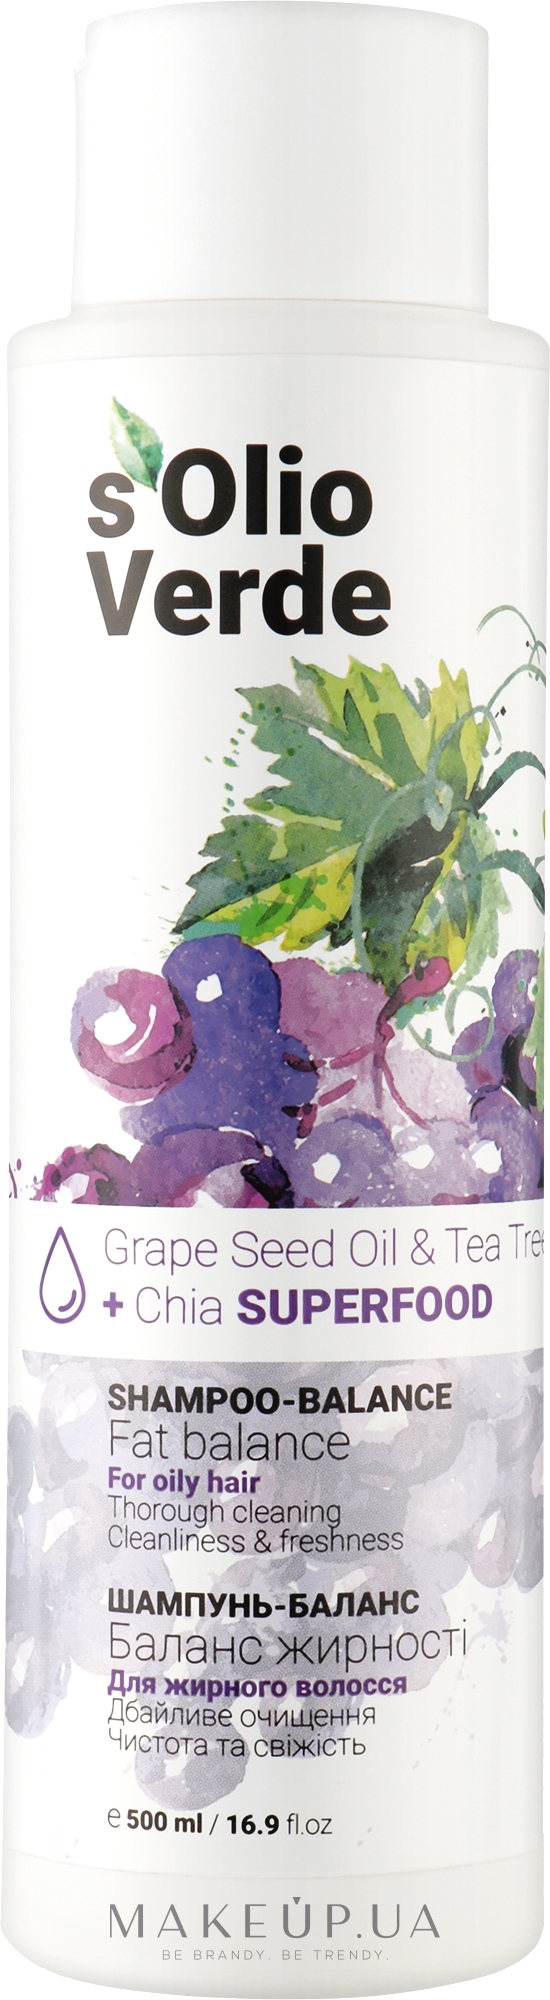 Шампунь-баланс для жирного волосся - Solio Verde Grape Speed Oil Shampoo-Balence — фото 500ml